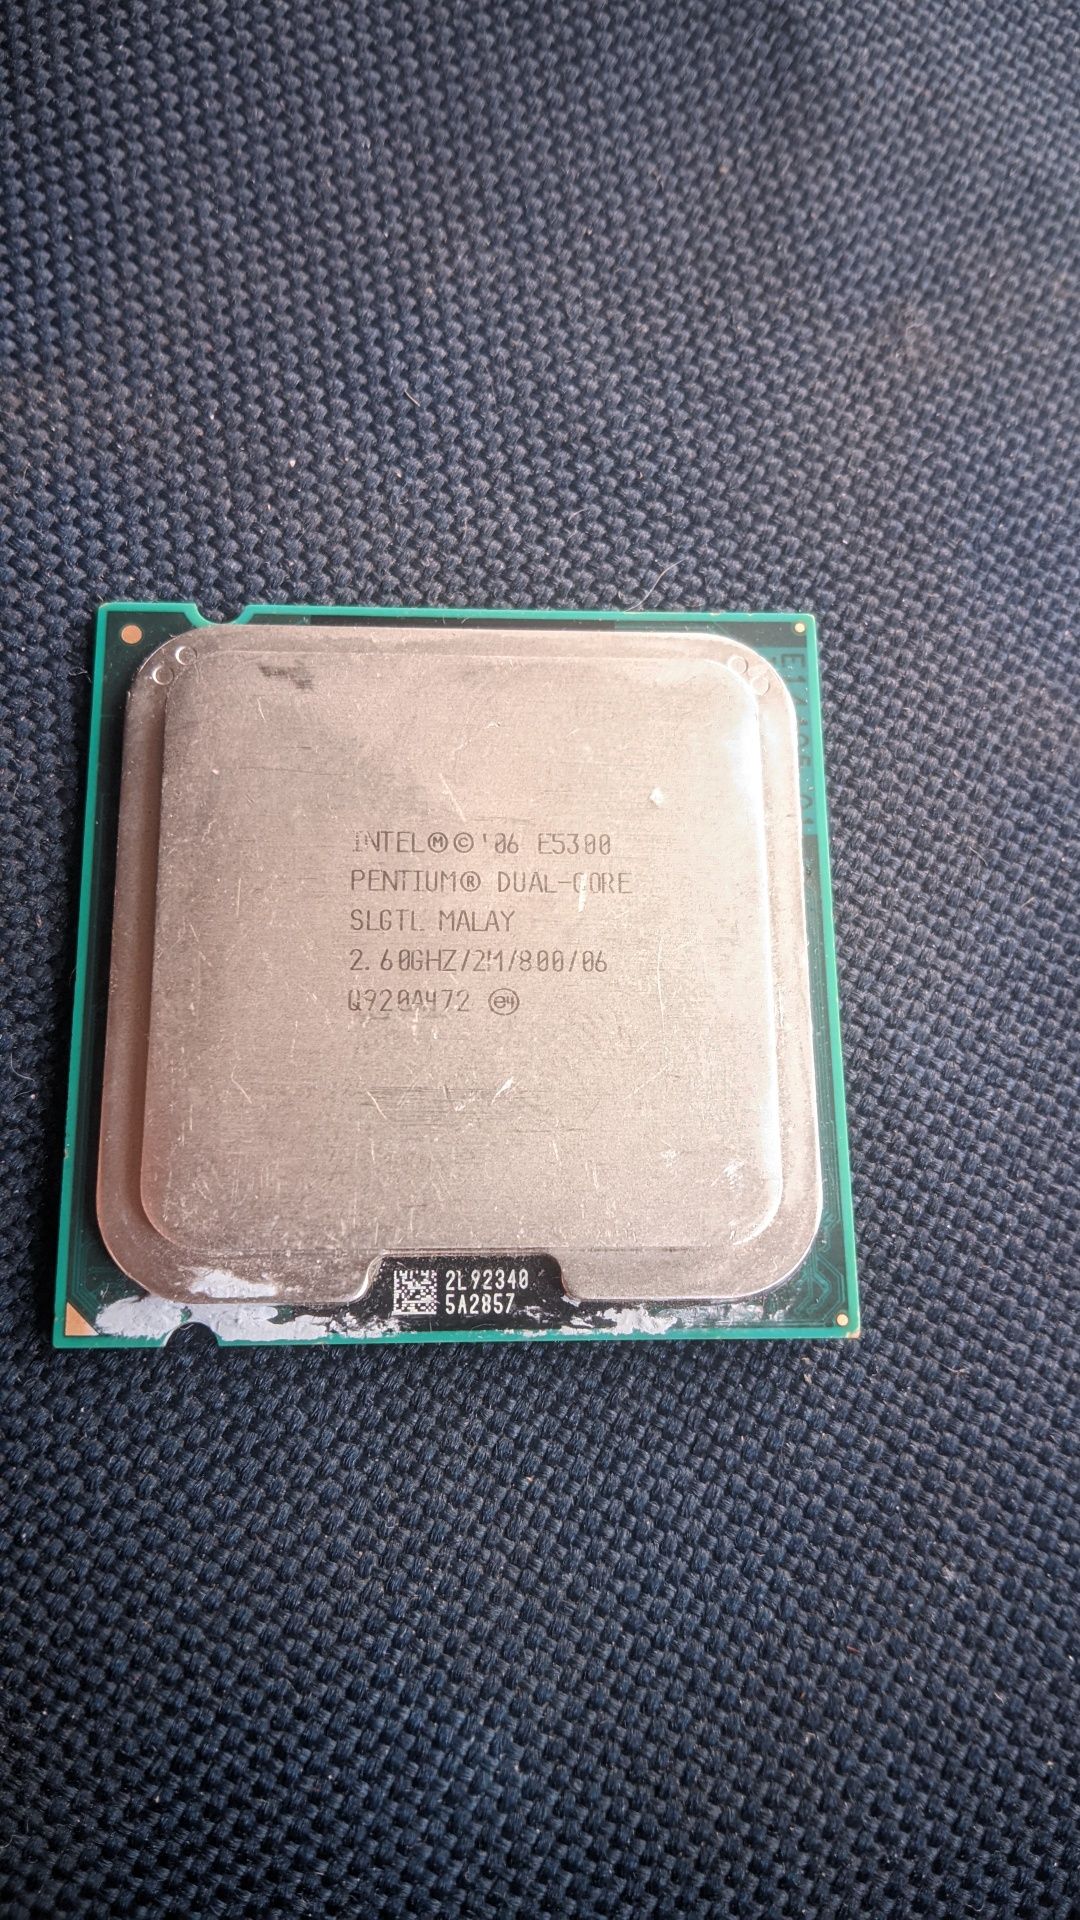 50 грн старые процесоры 775 сокет